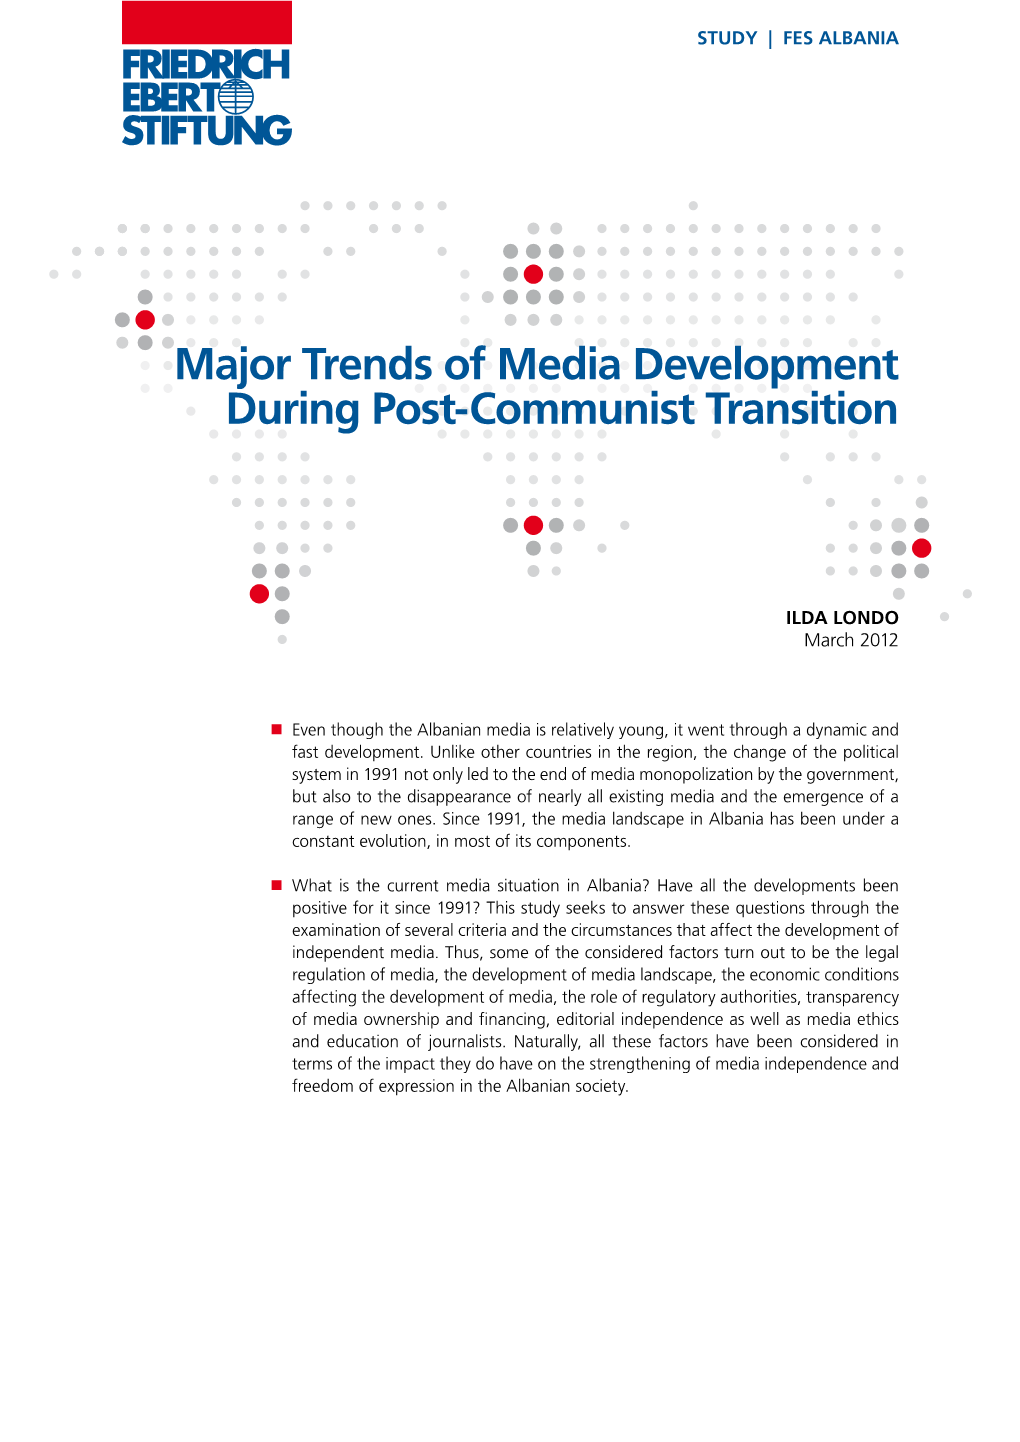 Major Trends of Media Development During Post-Communist Transition